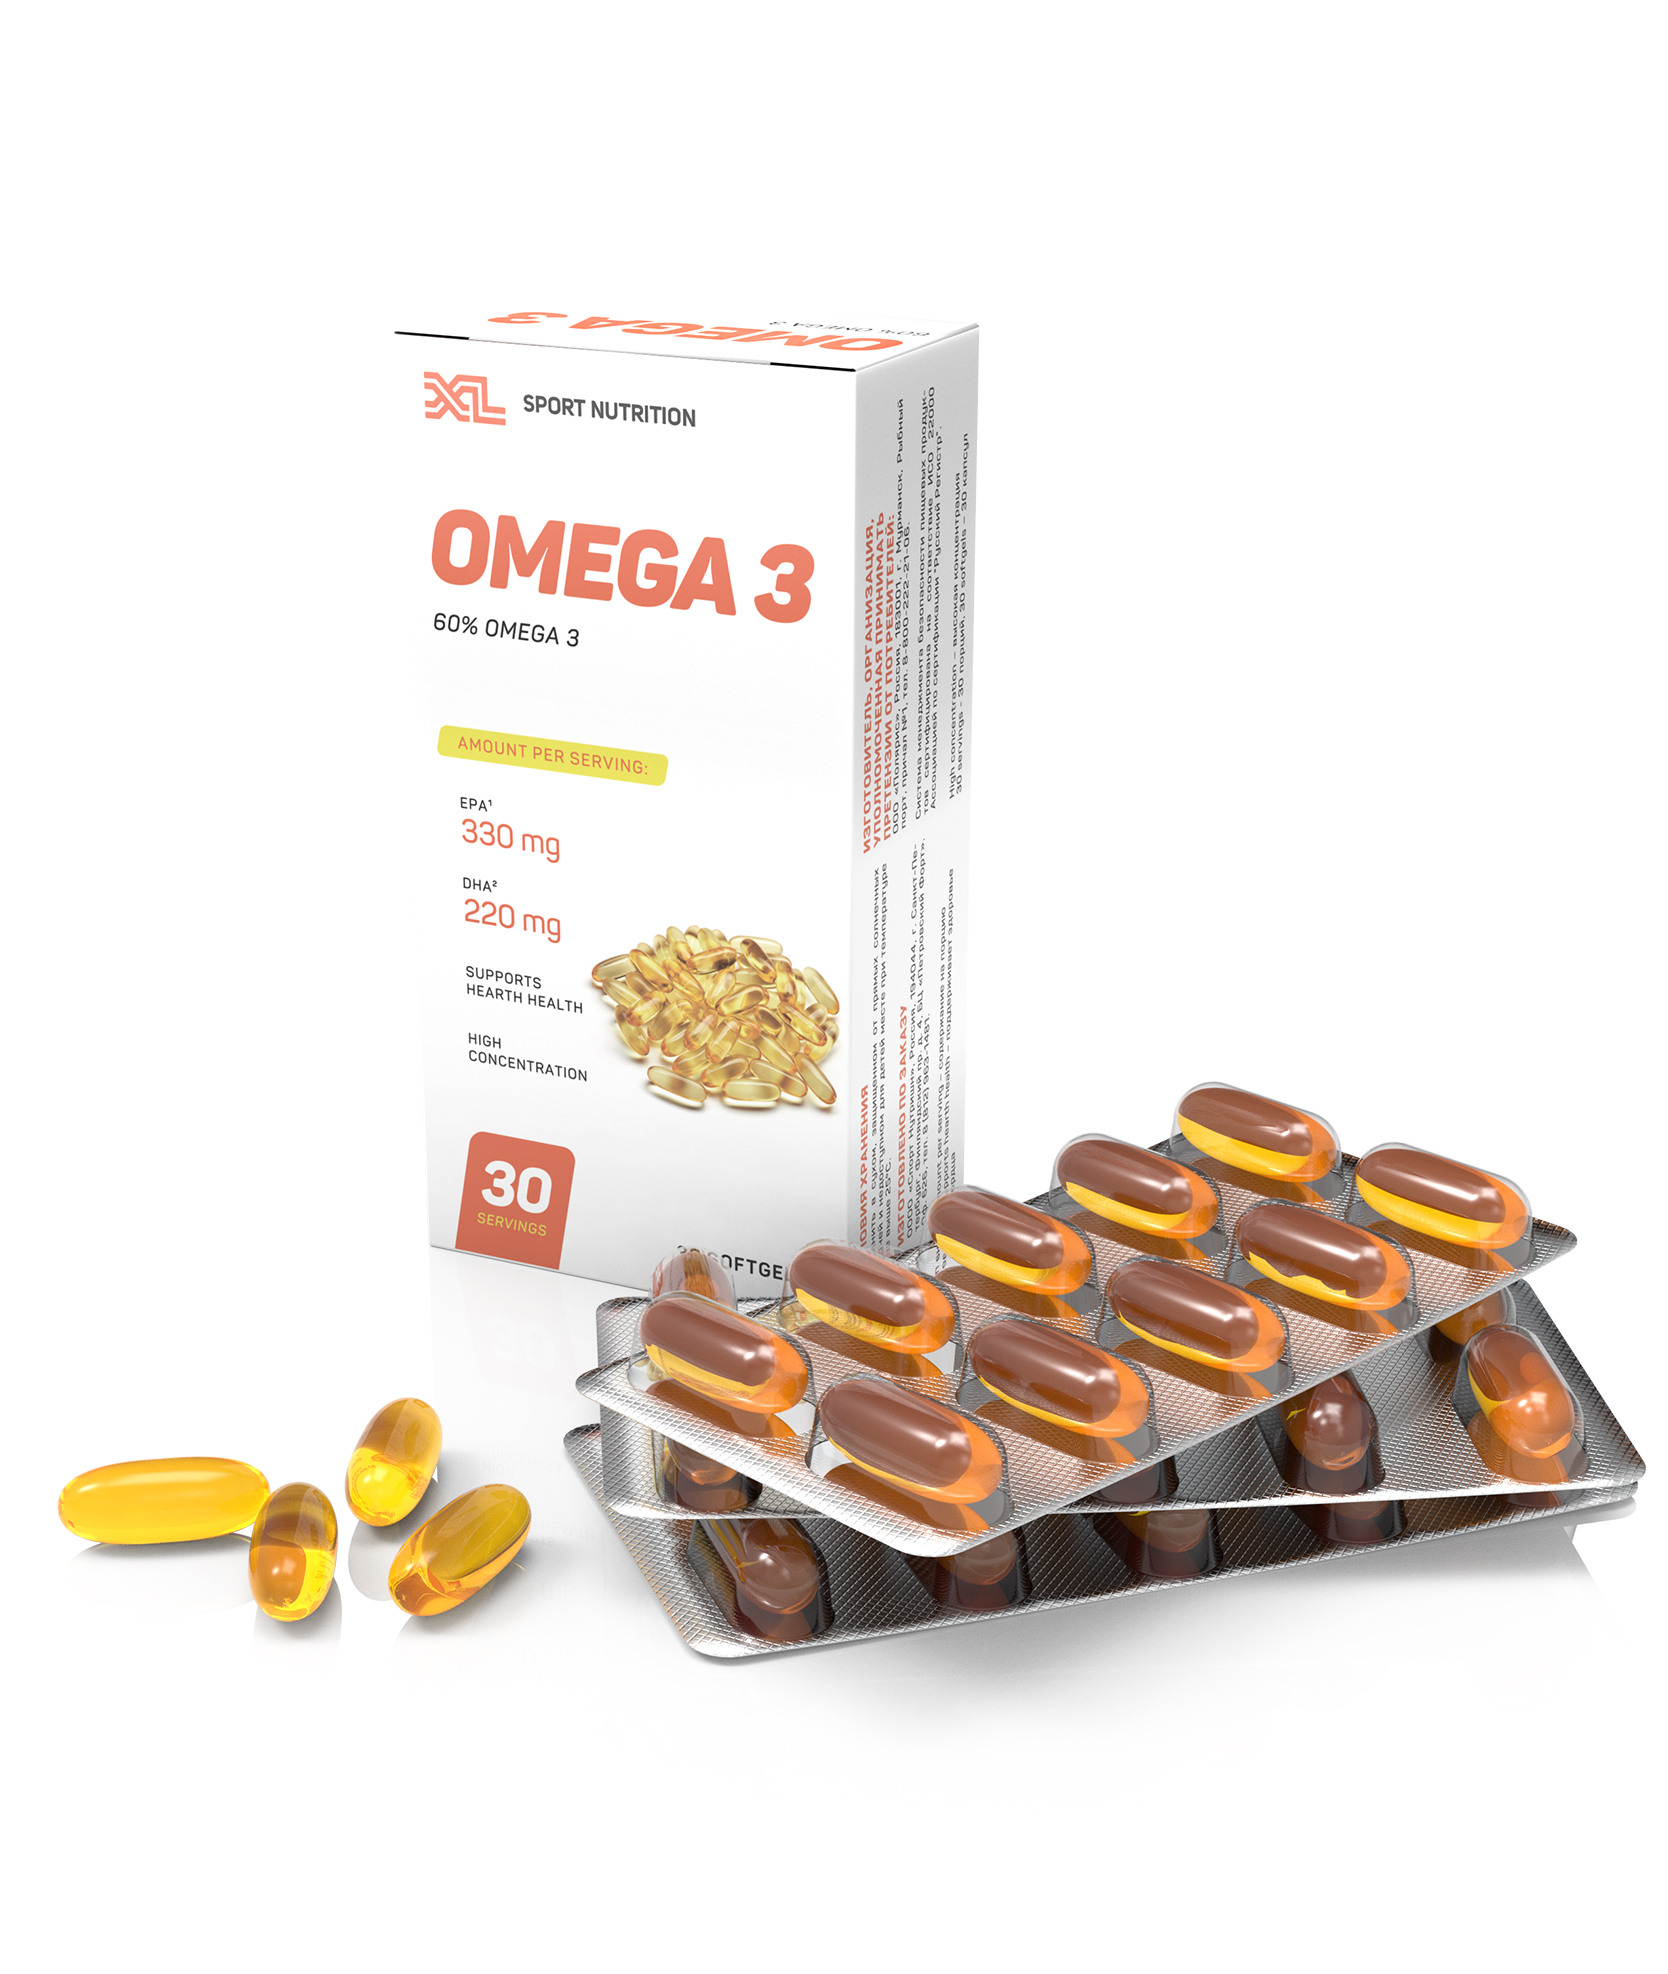 XL Omega 3 60%, 30 softgels